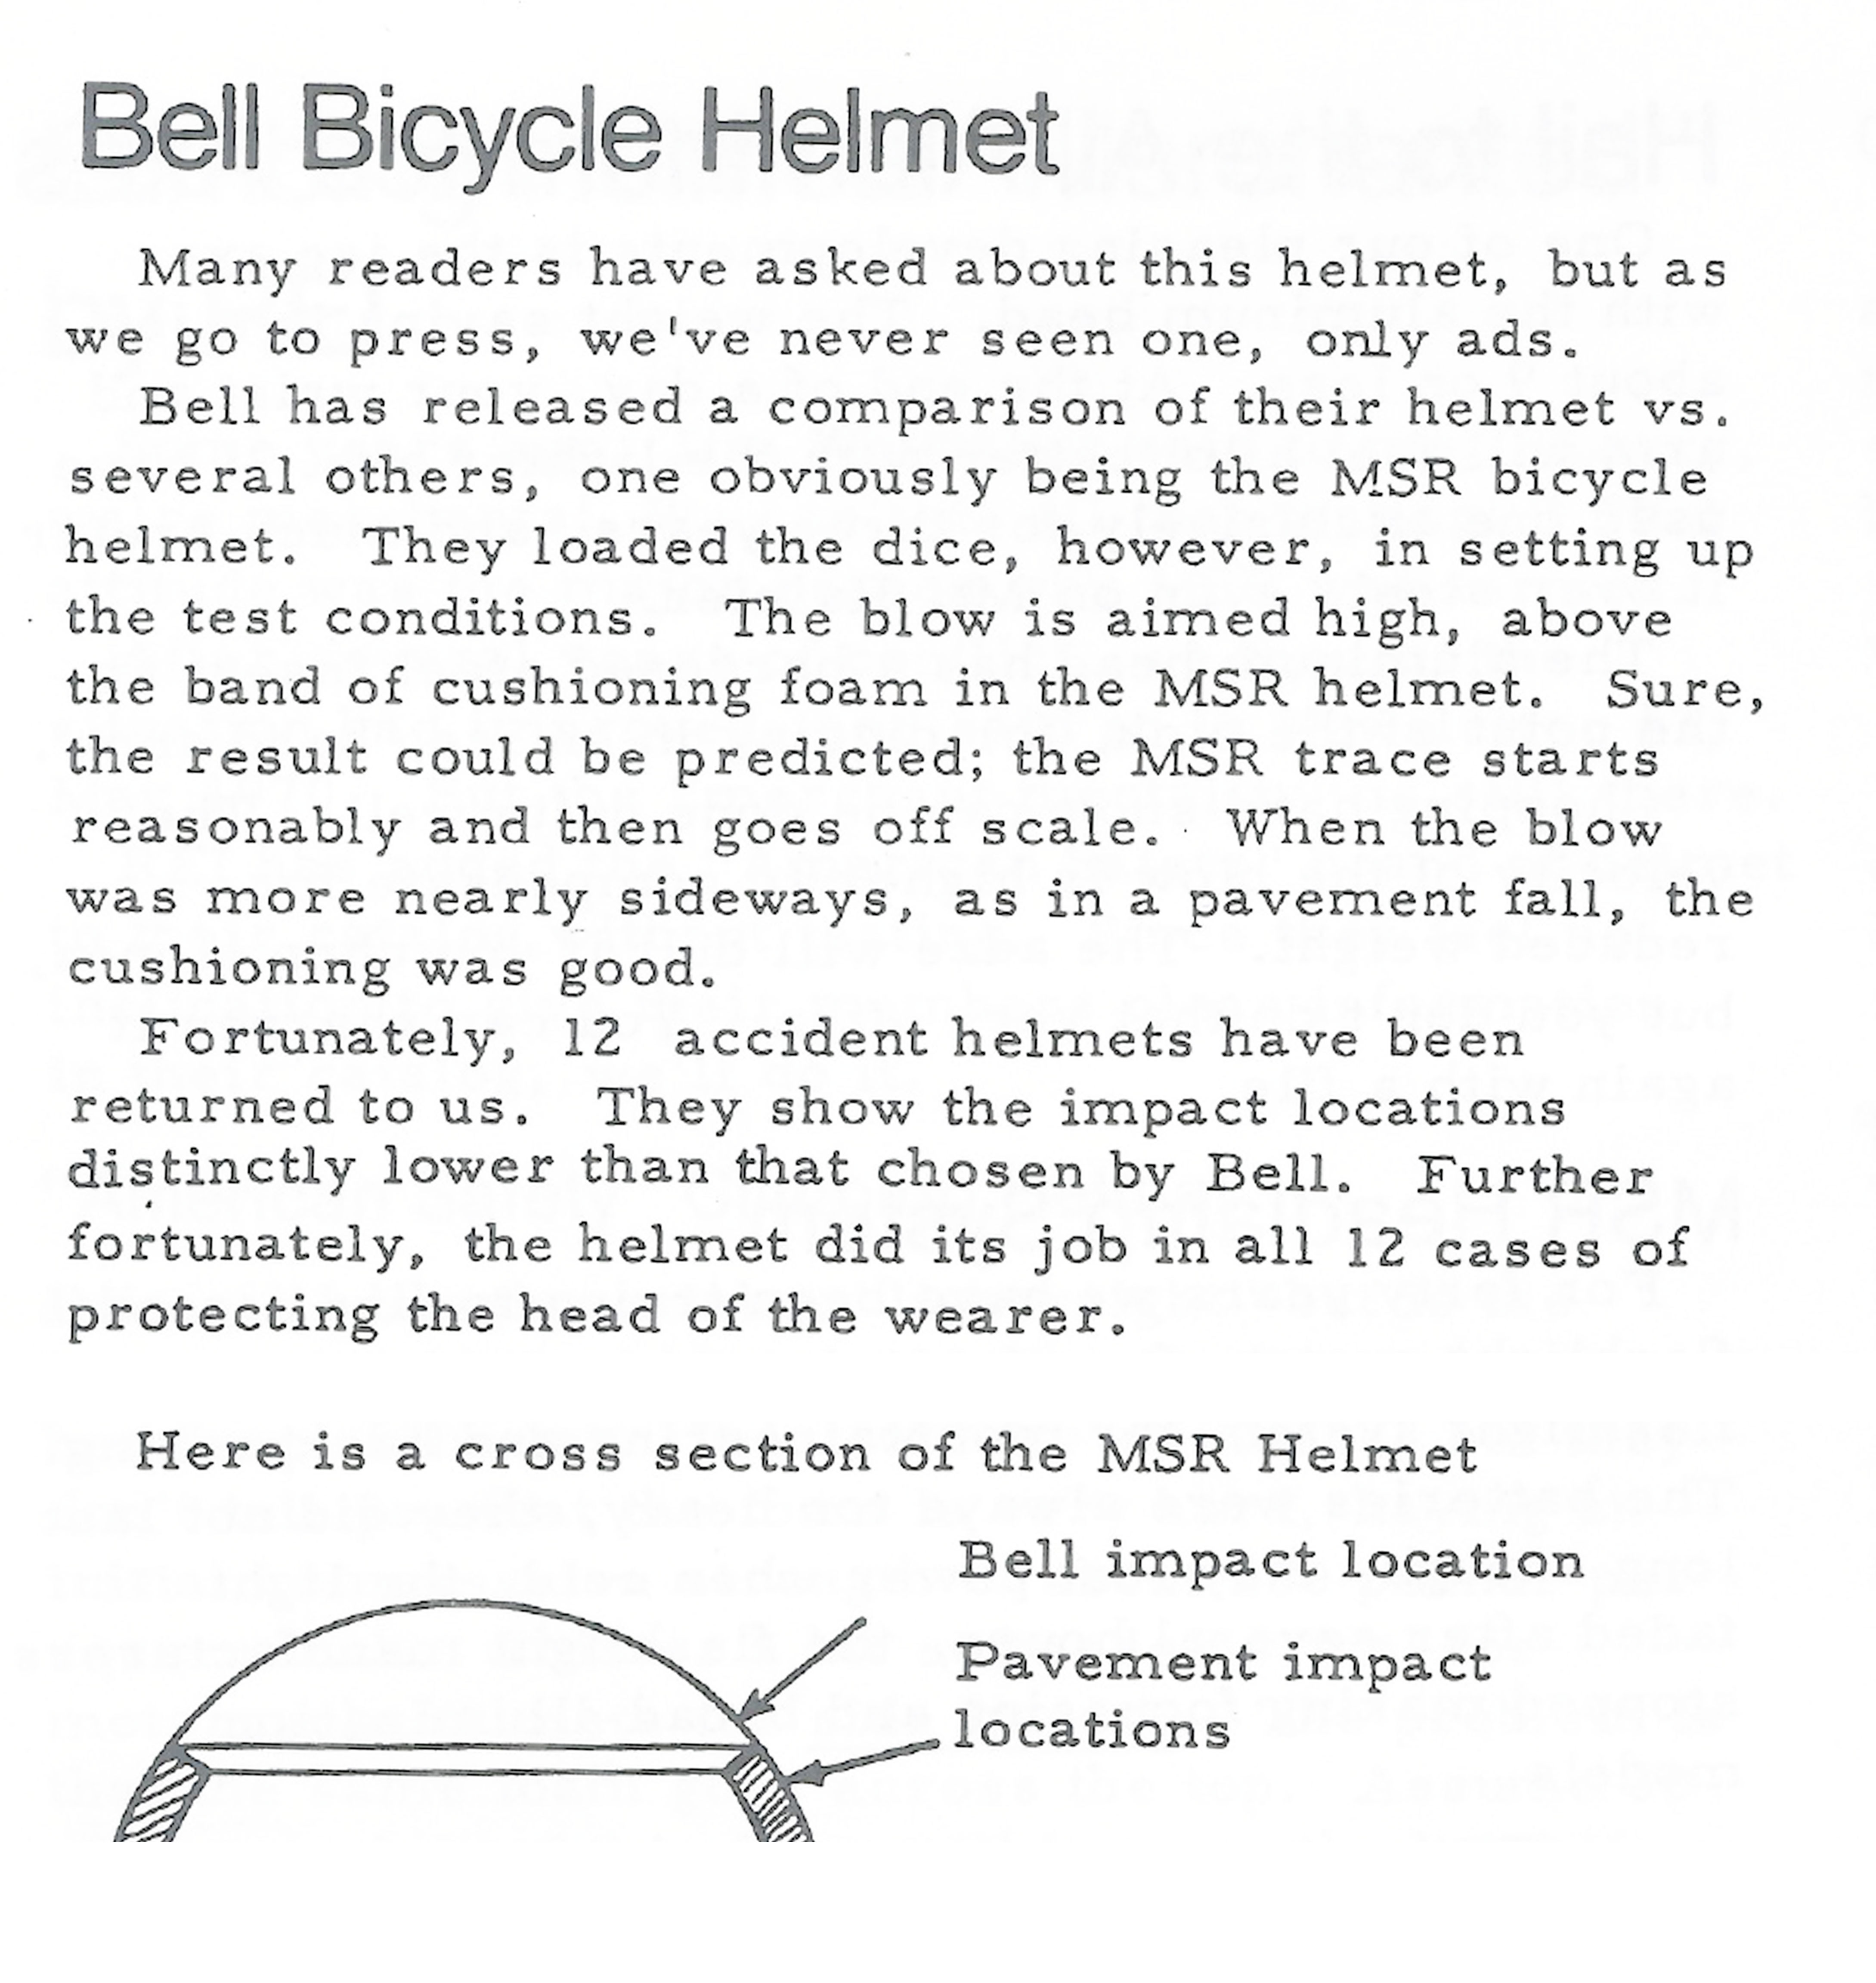 MSR bell bicycle helmet newsletter